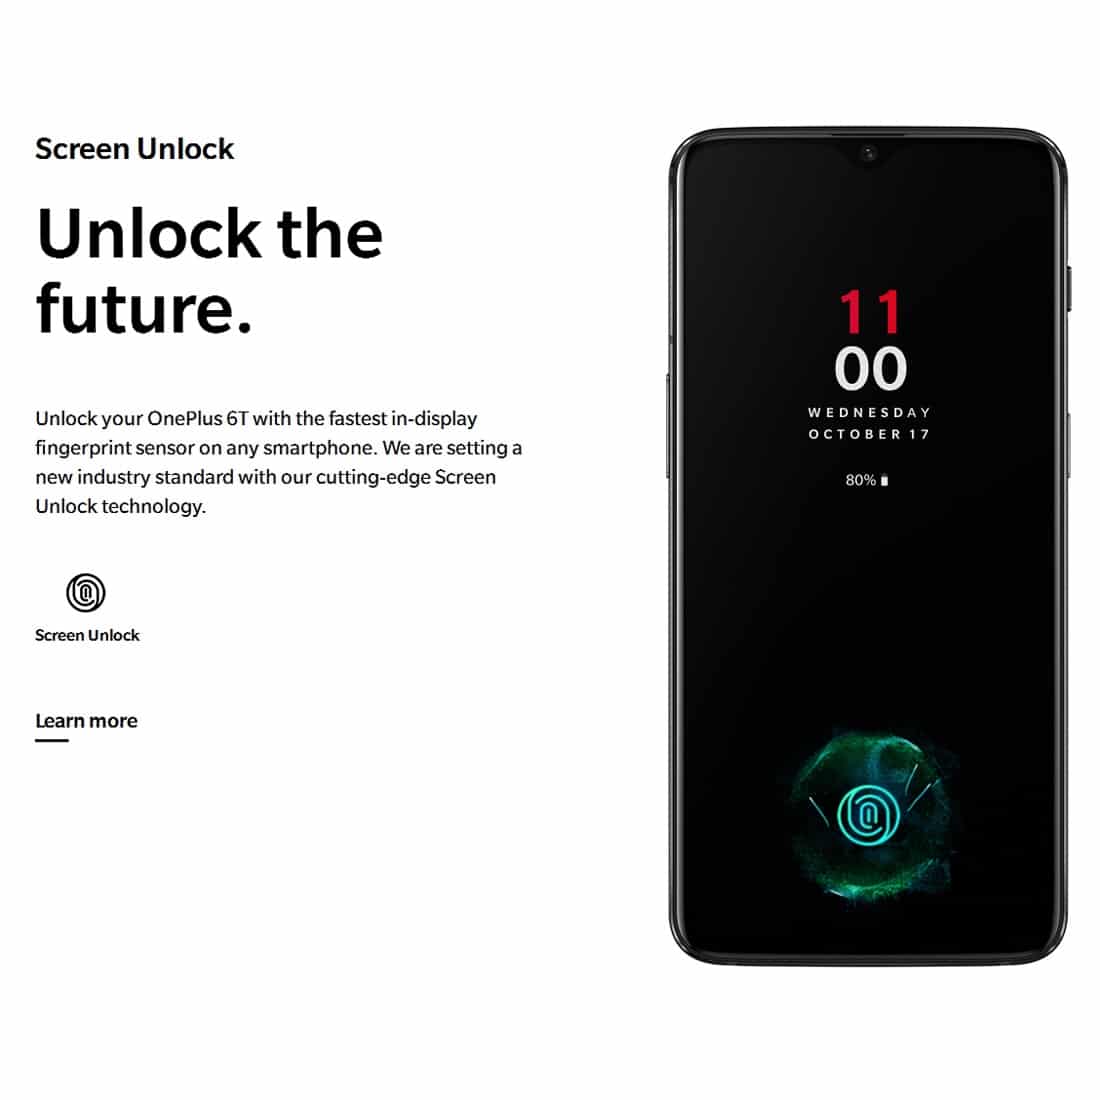 OnePlus 6T Smartphone